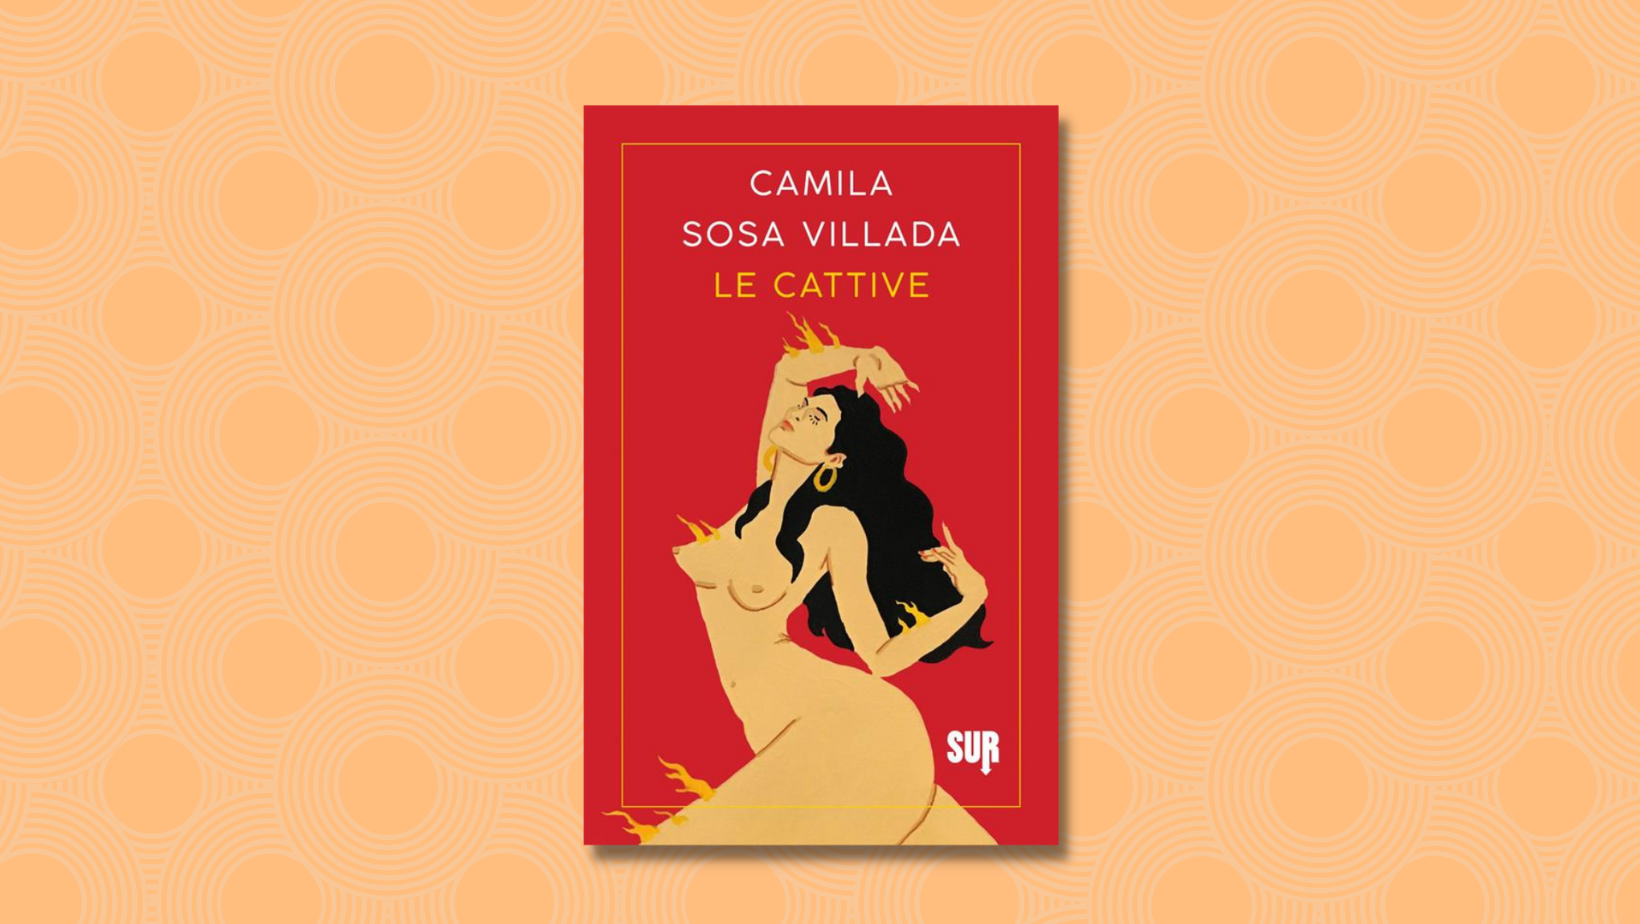 Bad Girls By Camila Sosa Villada. A Review By Claudia Mazzilli